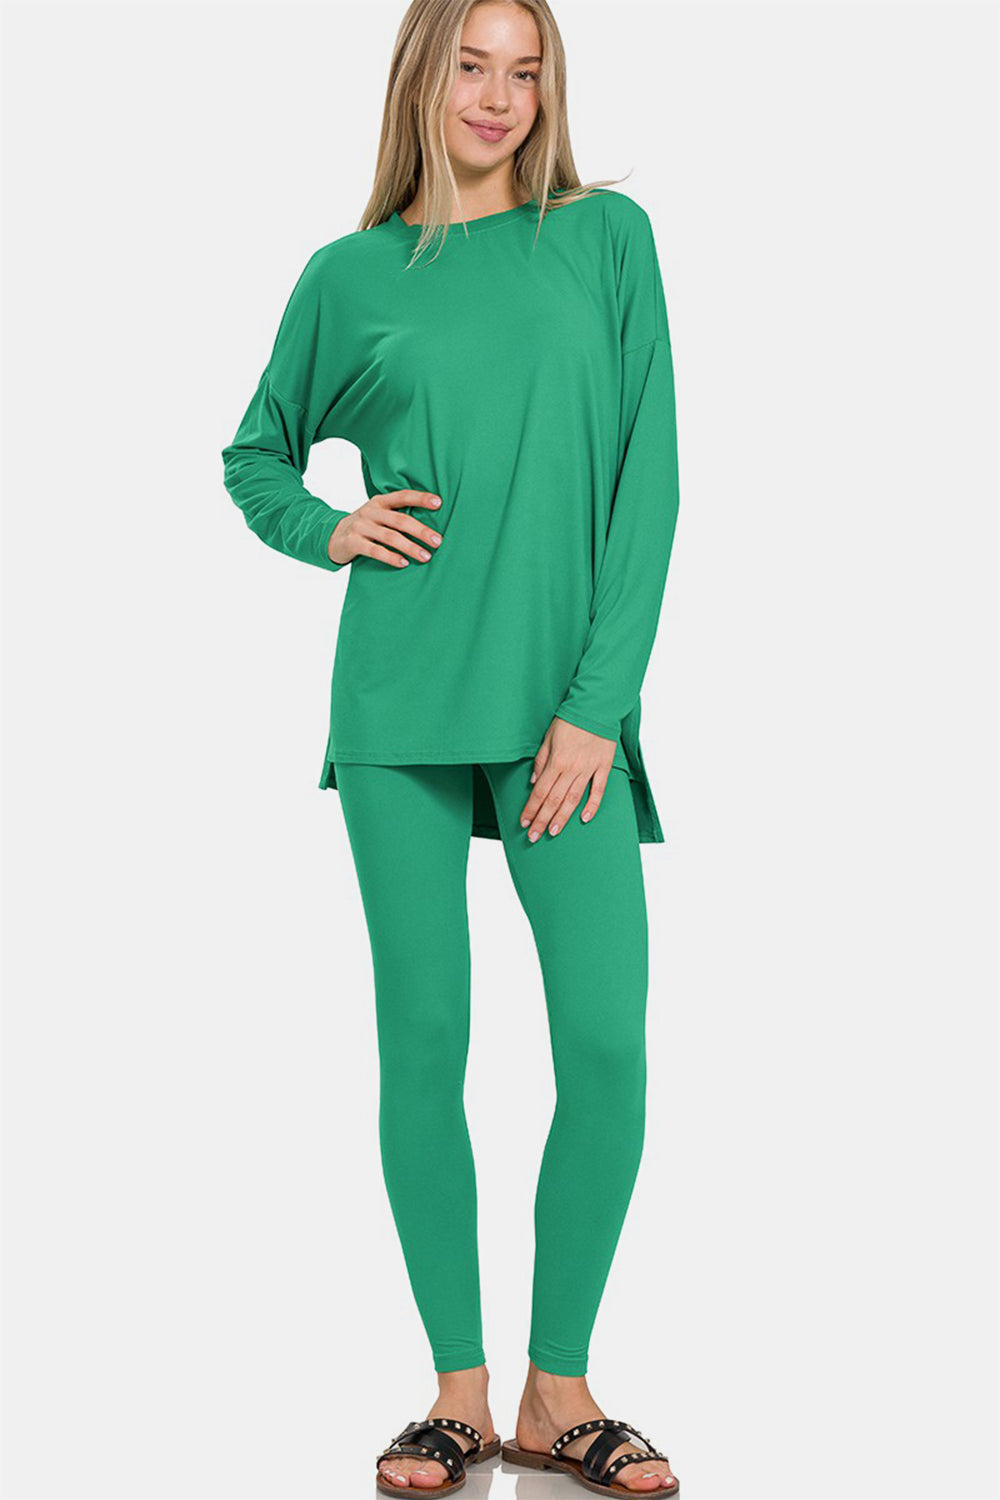 Zenana Kelly Green Brushed Microfiber Long Sleeve Top and Leggings Lounge Set K Green Trendsi